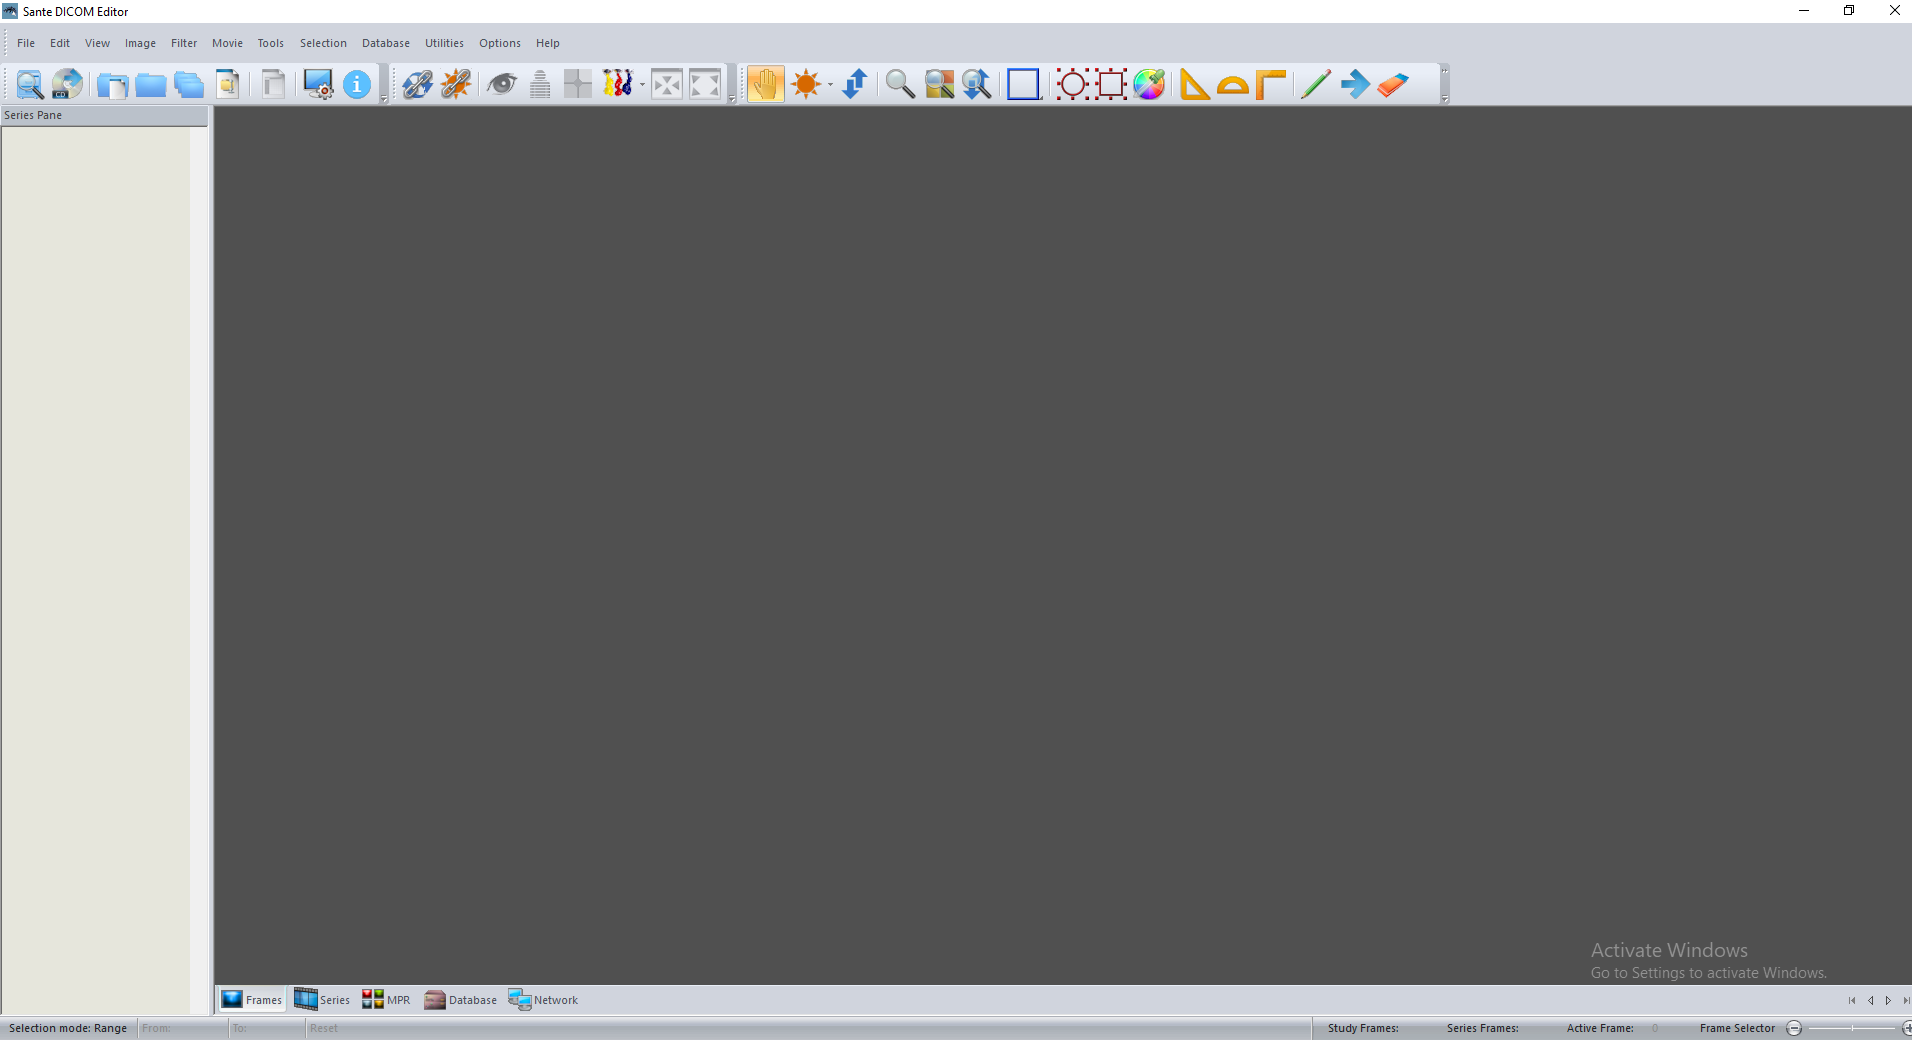 Sante DICOM Editor 8.2.5 instal the last version for windows